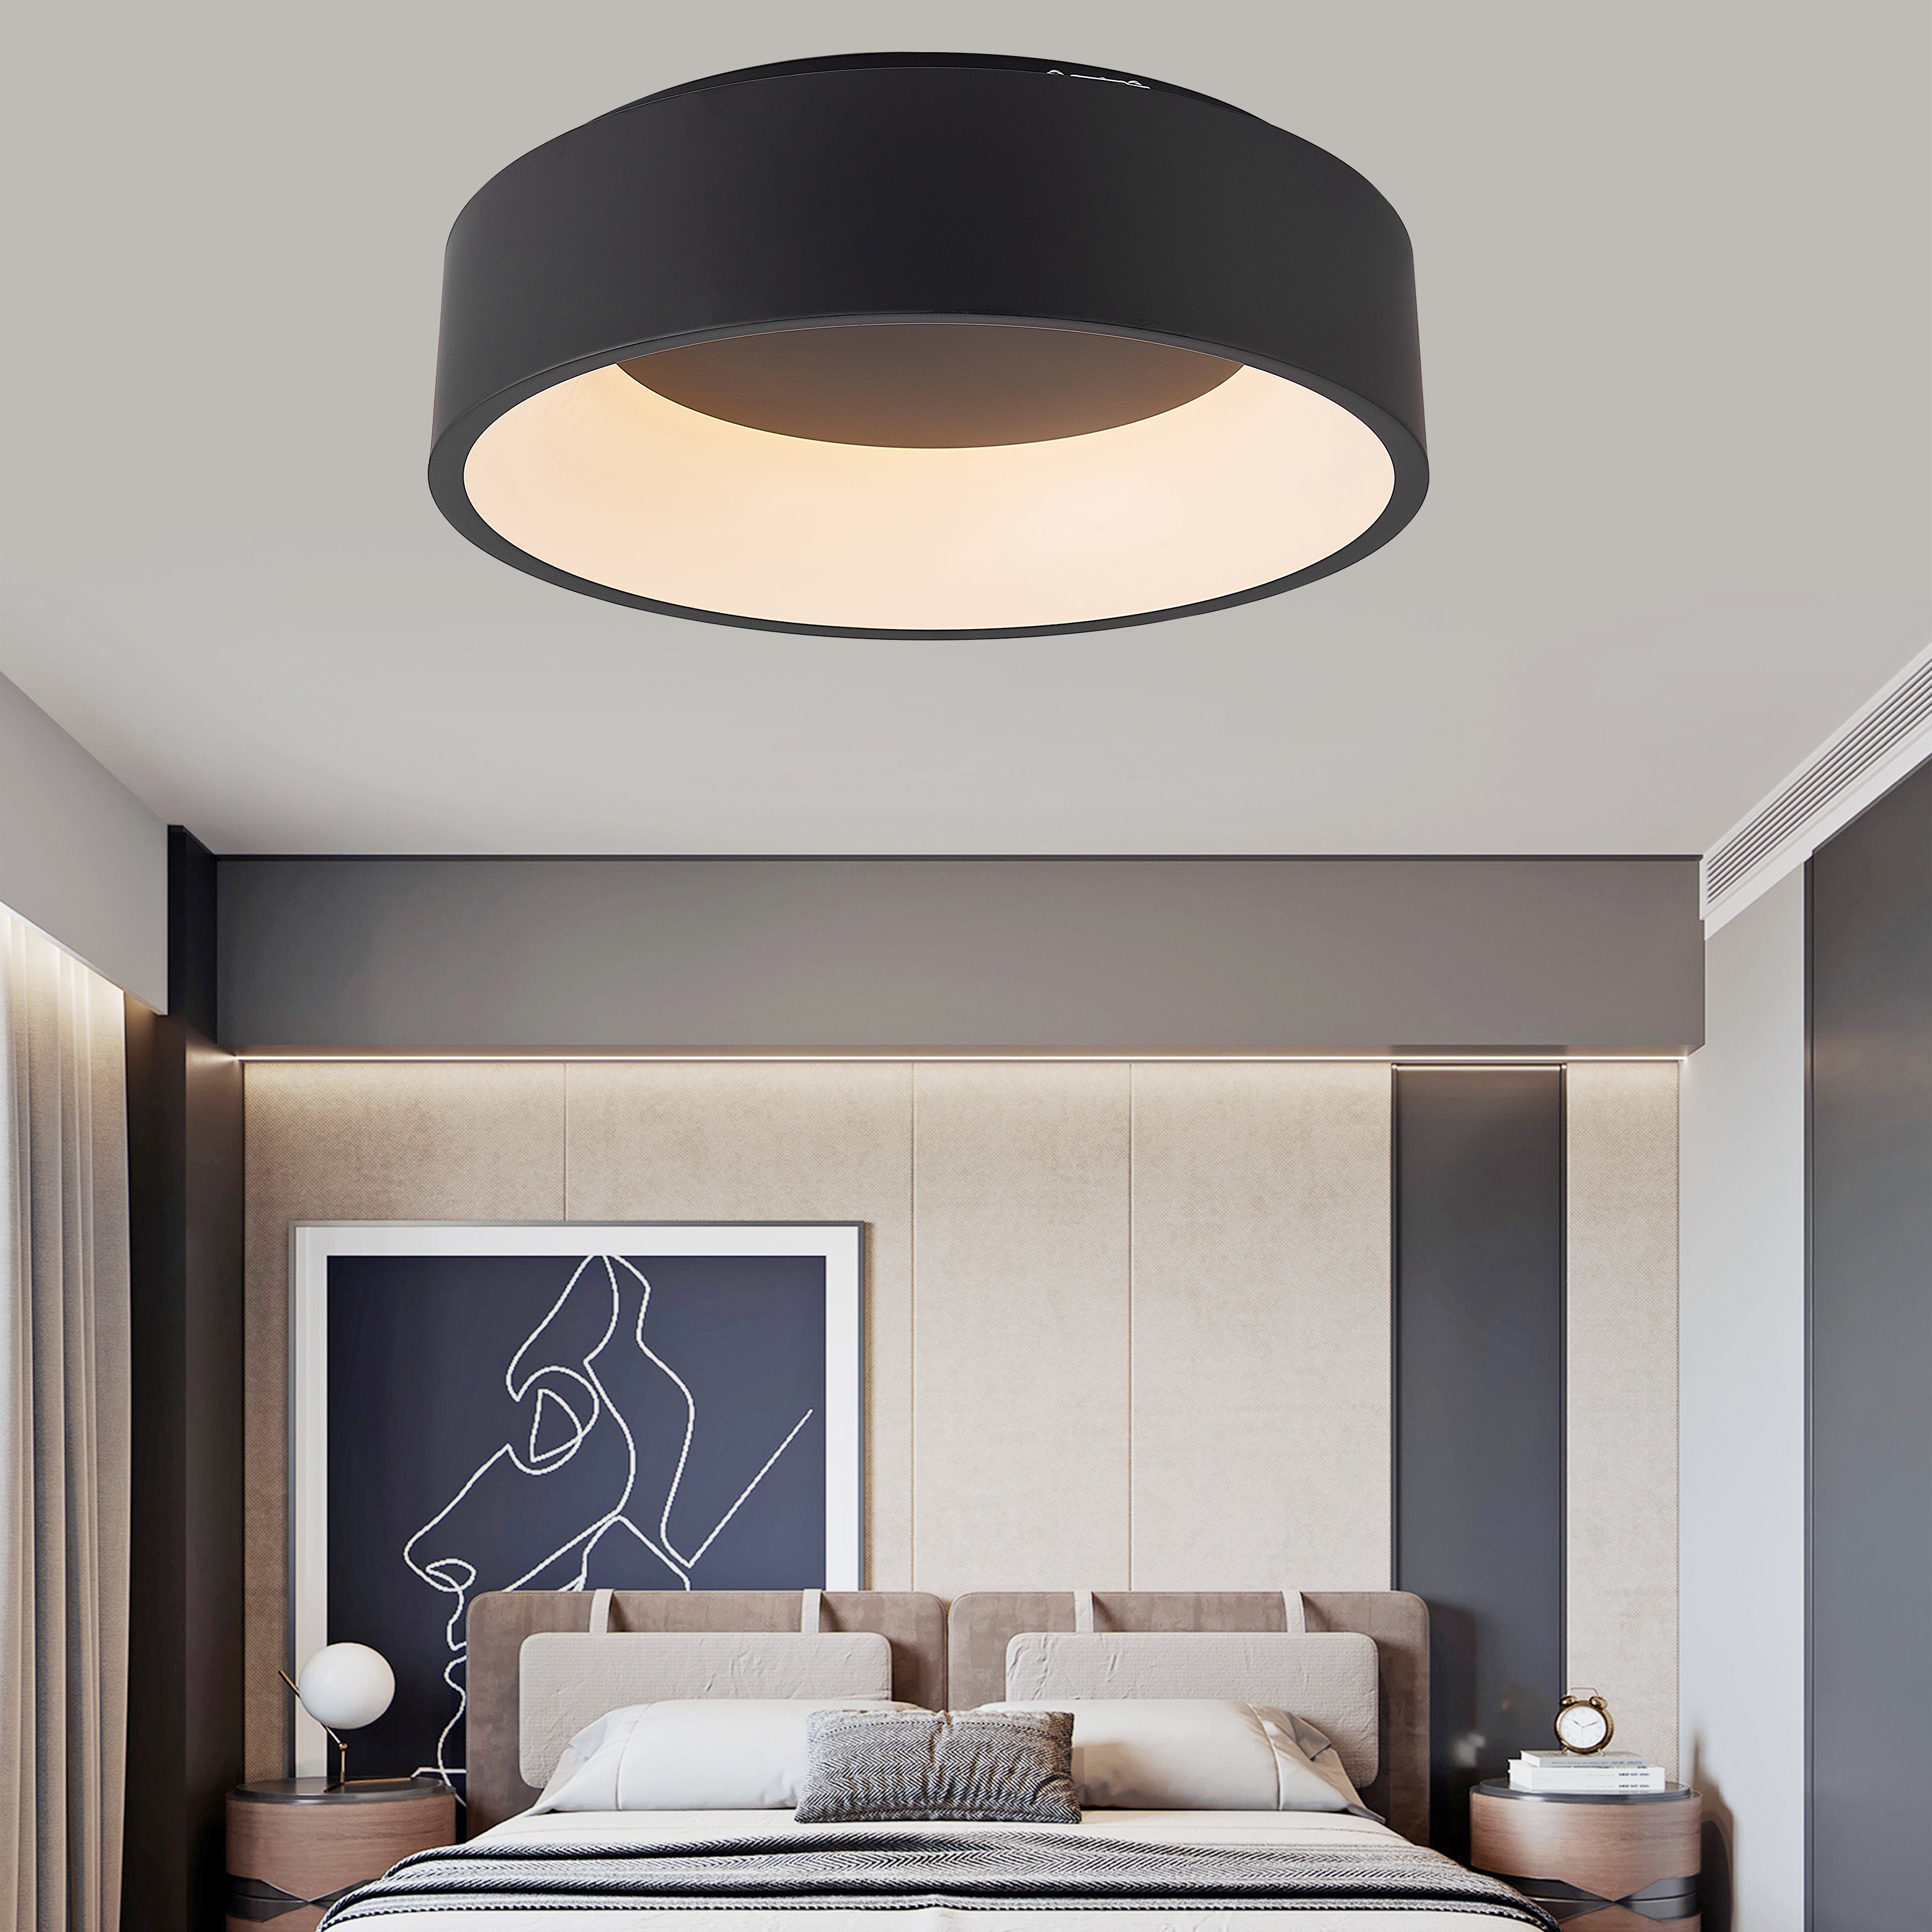 Shop Stylish LED Ceiling Lights and Fixtures – Viva LED